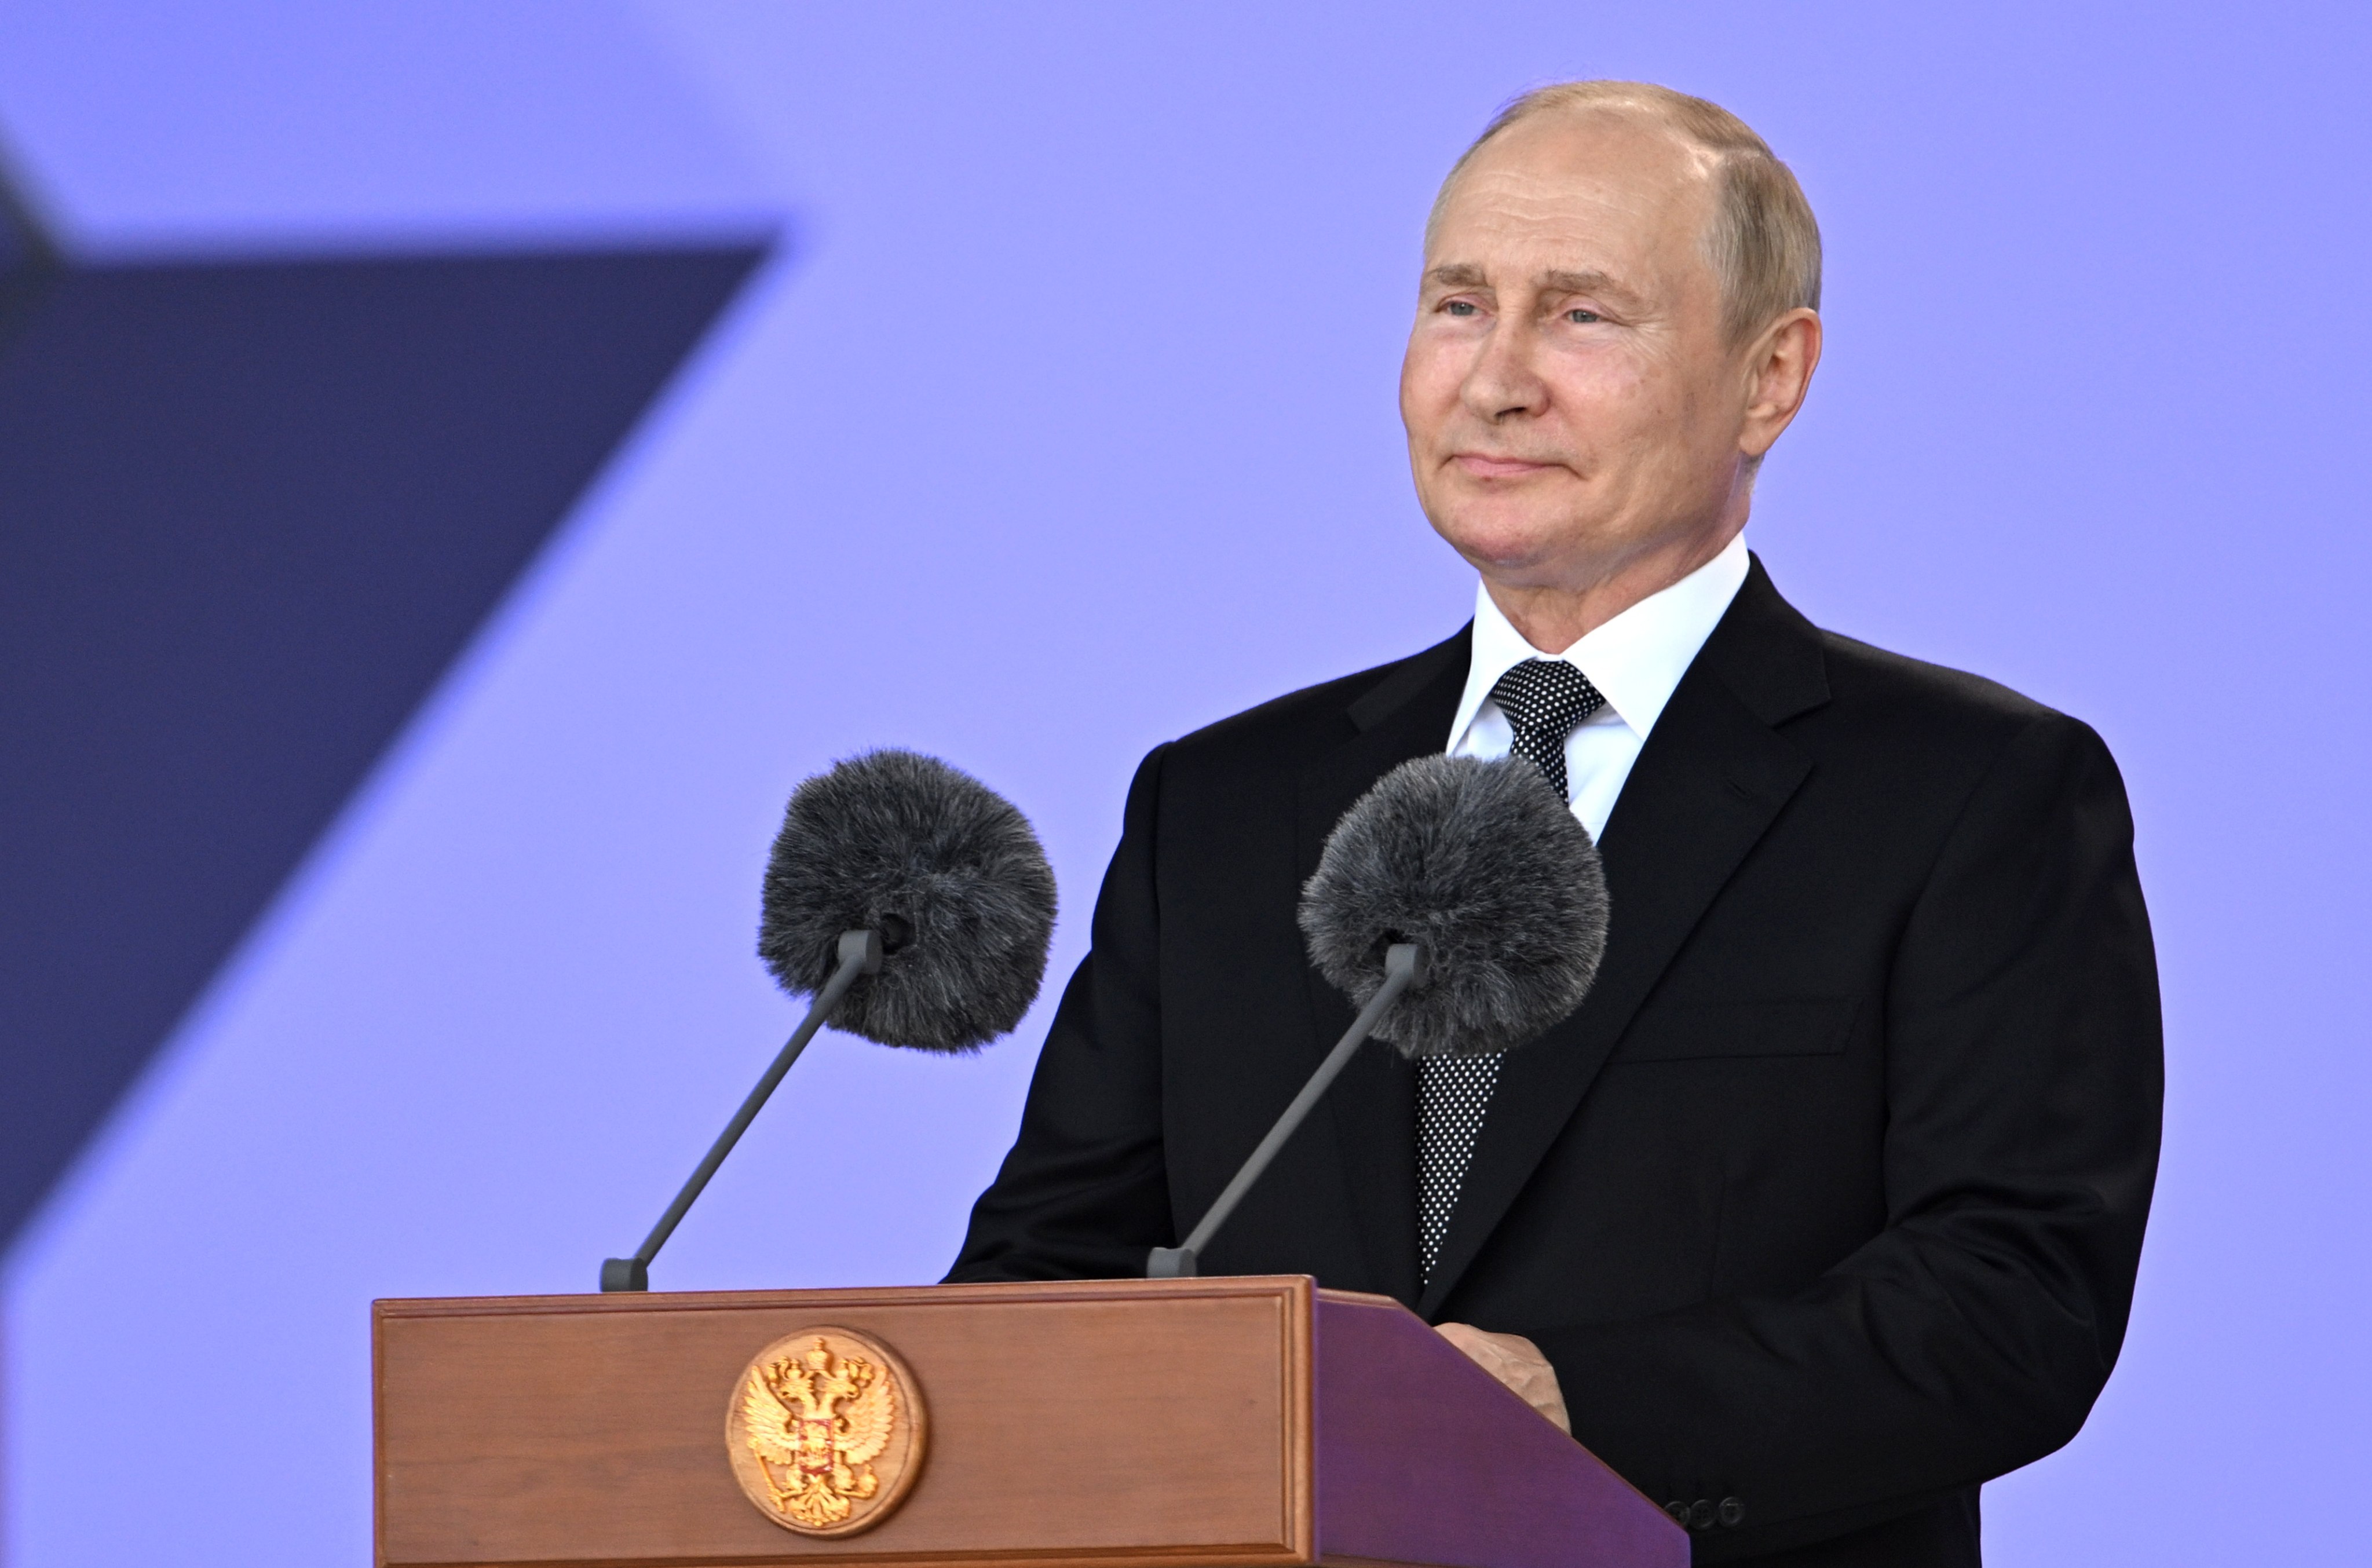 Russian President Vladimir Putin speaks at an event in Kubinka, Russia, on August 14. Photo: EPA-EFE/Kremlin Pool